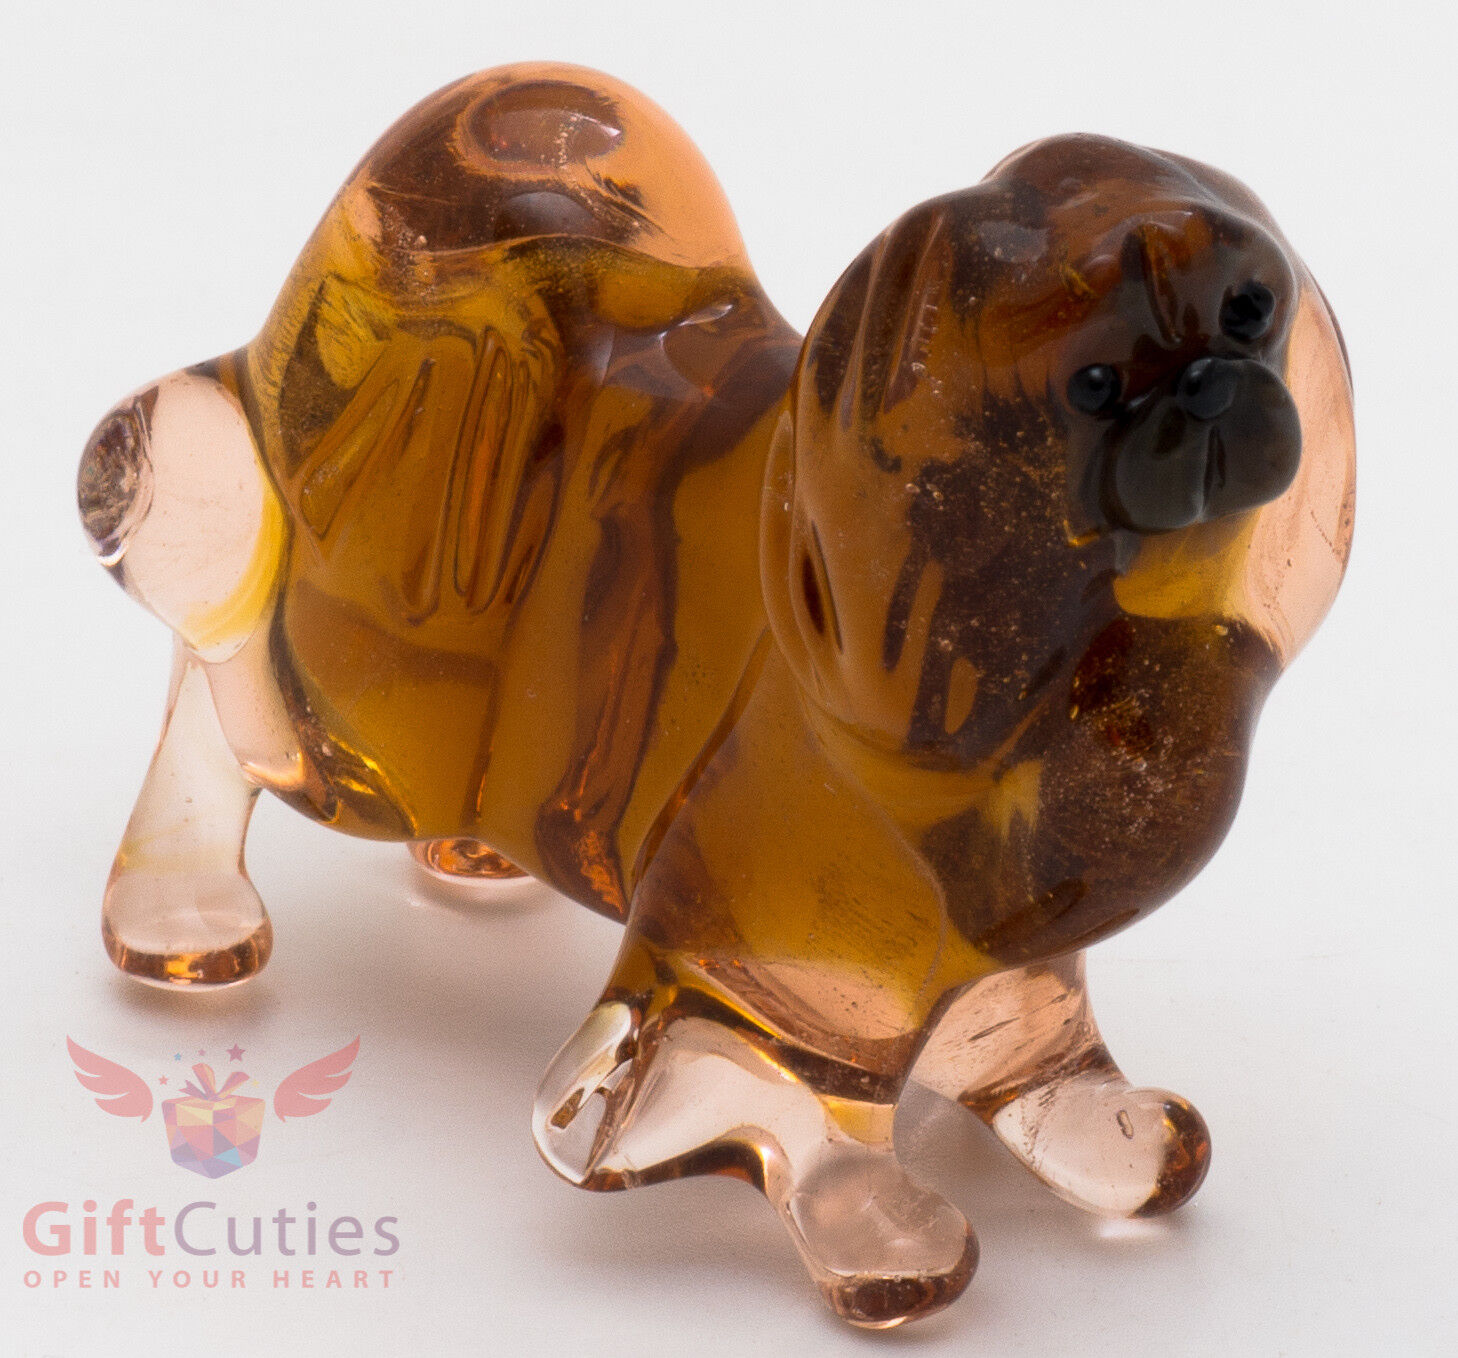 Art Blown Glass Figurine of the Pekingese dog